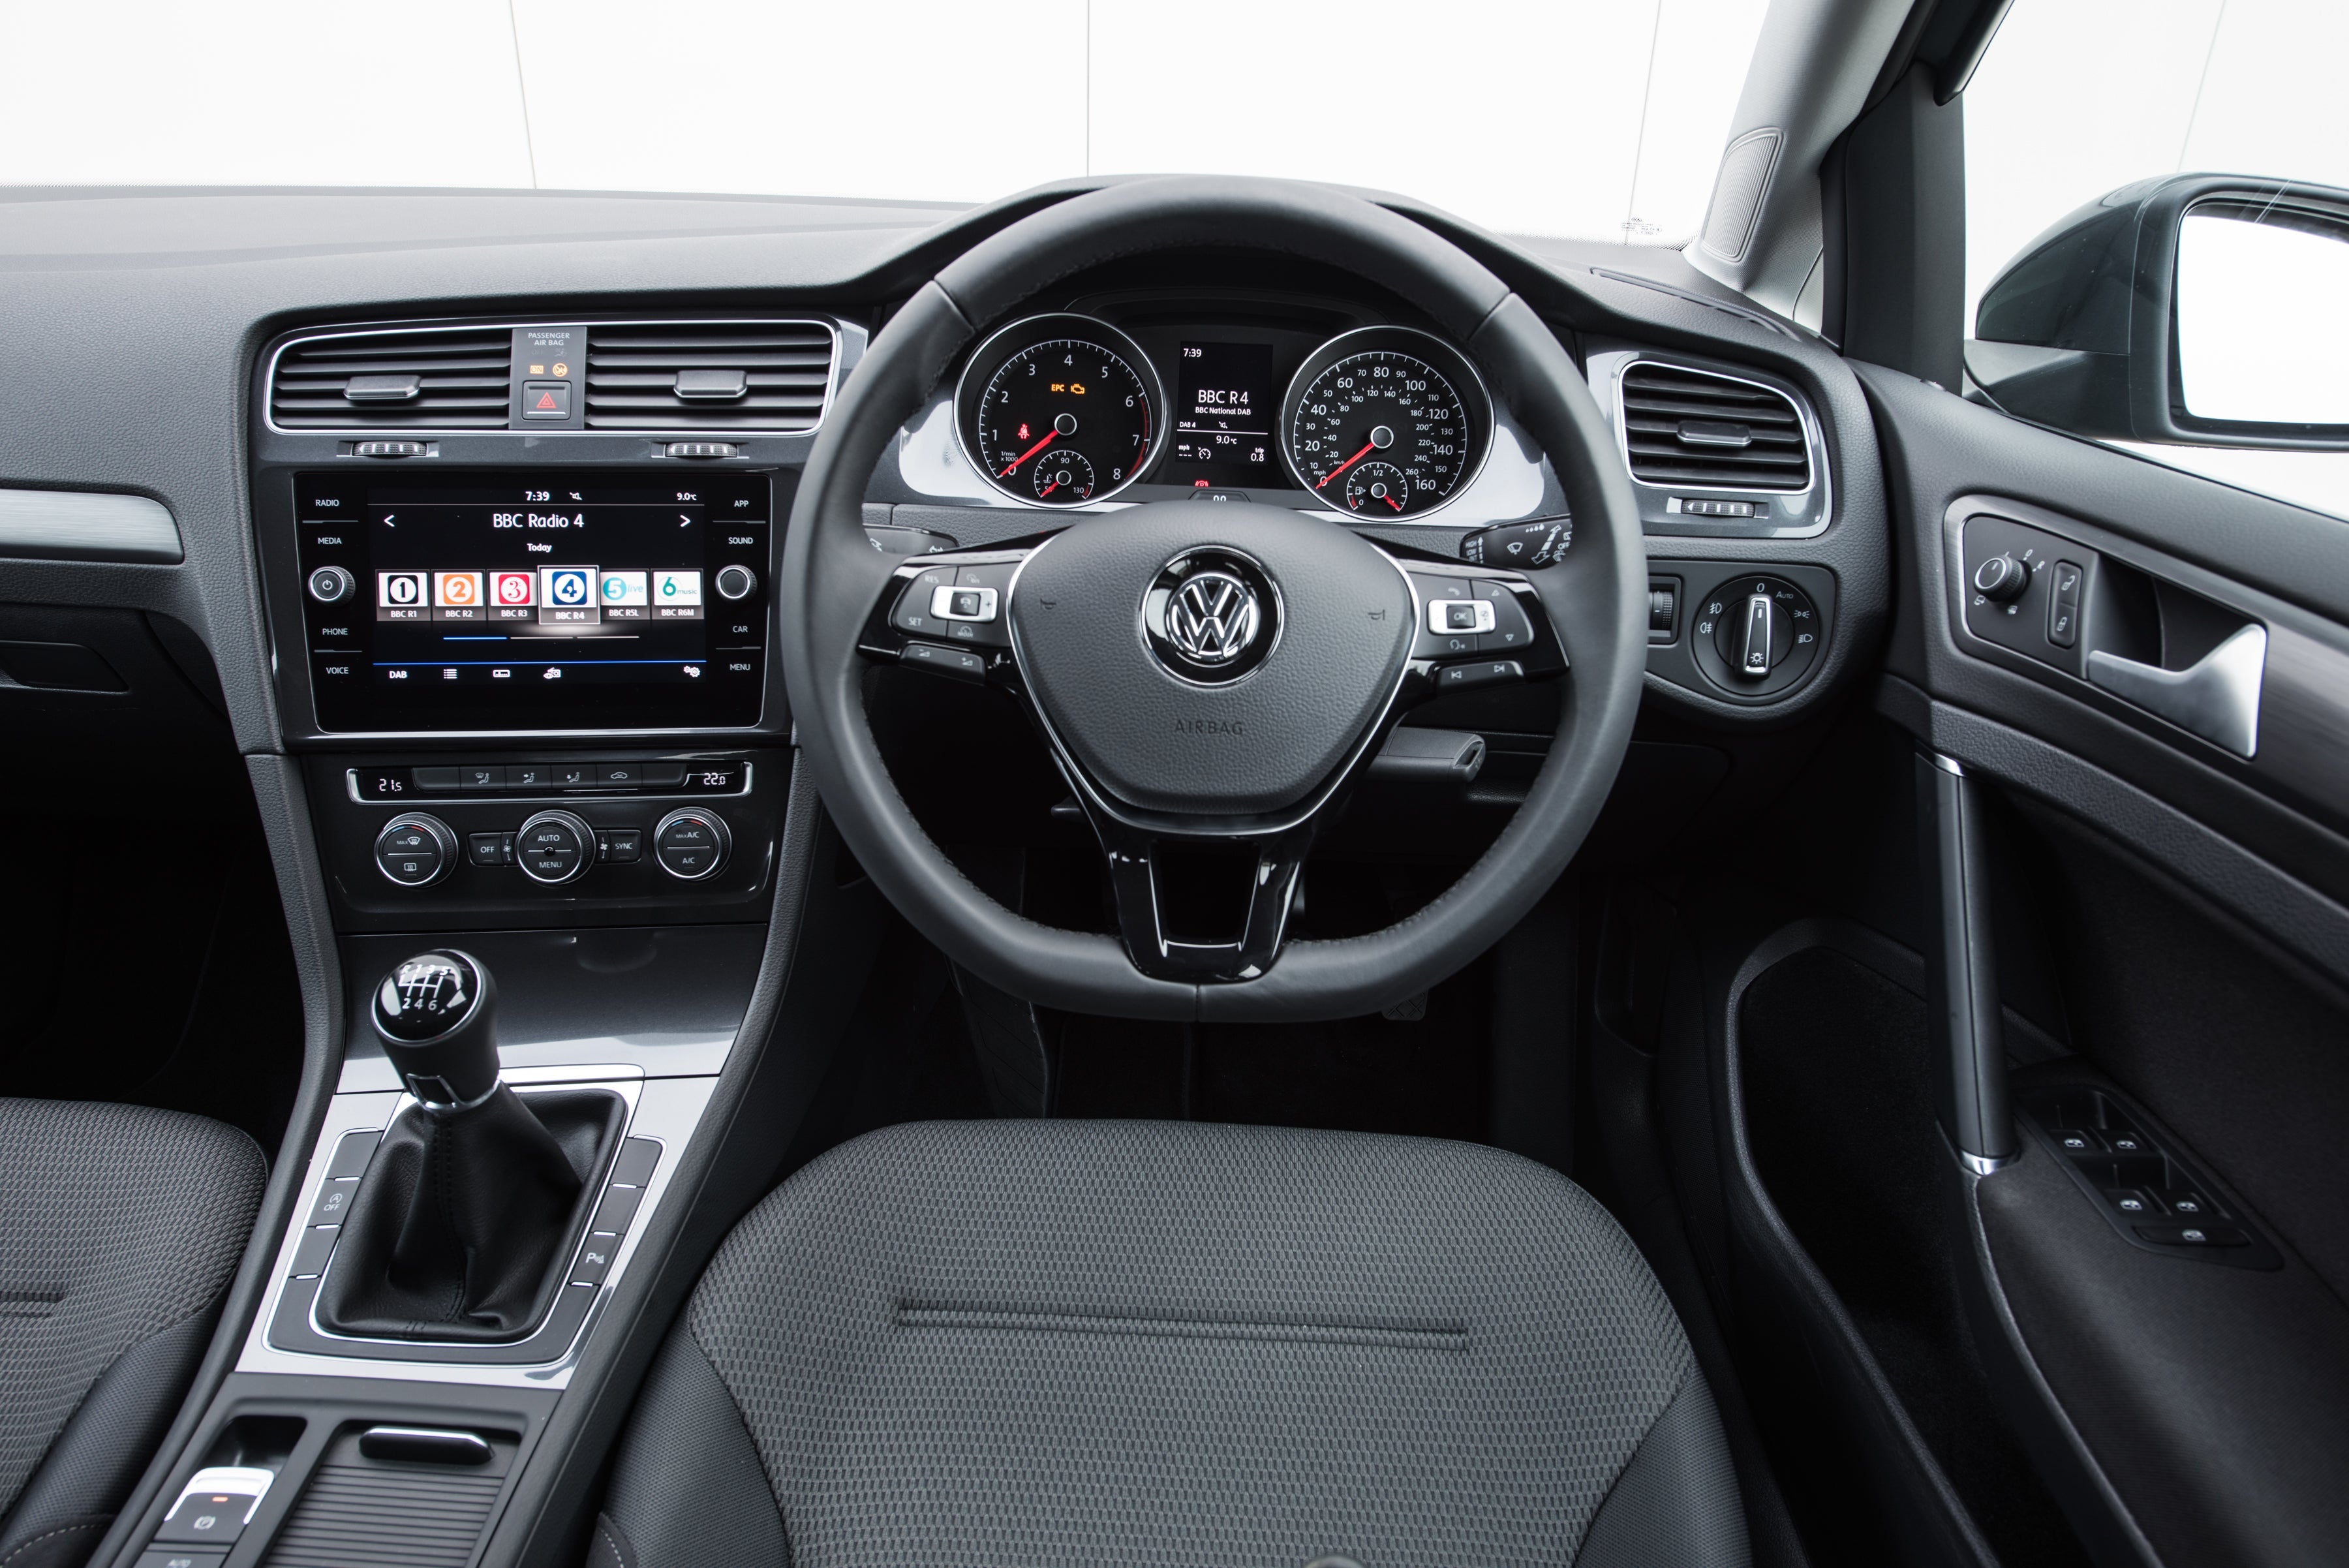 Evolution of the Volkswagen Golf interior | Swansway Blog